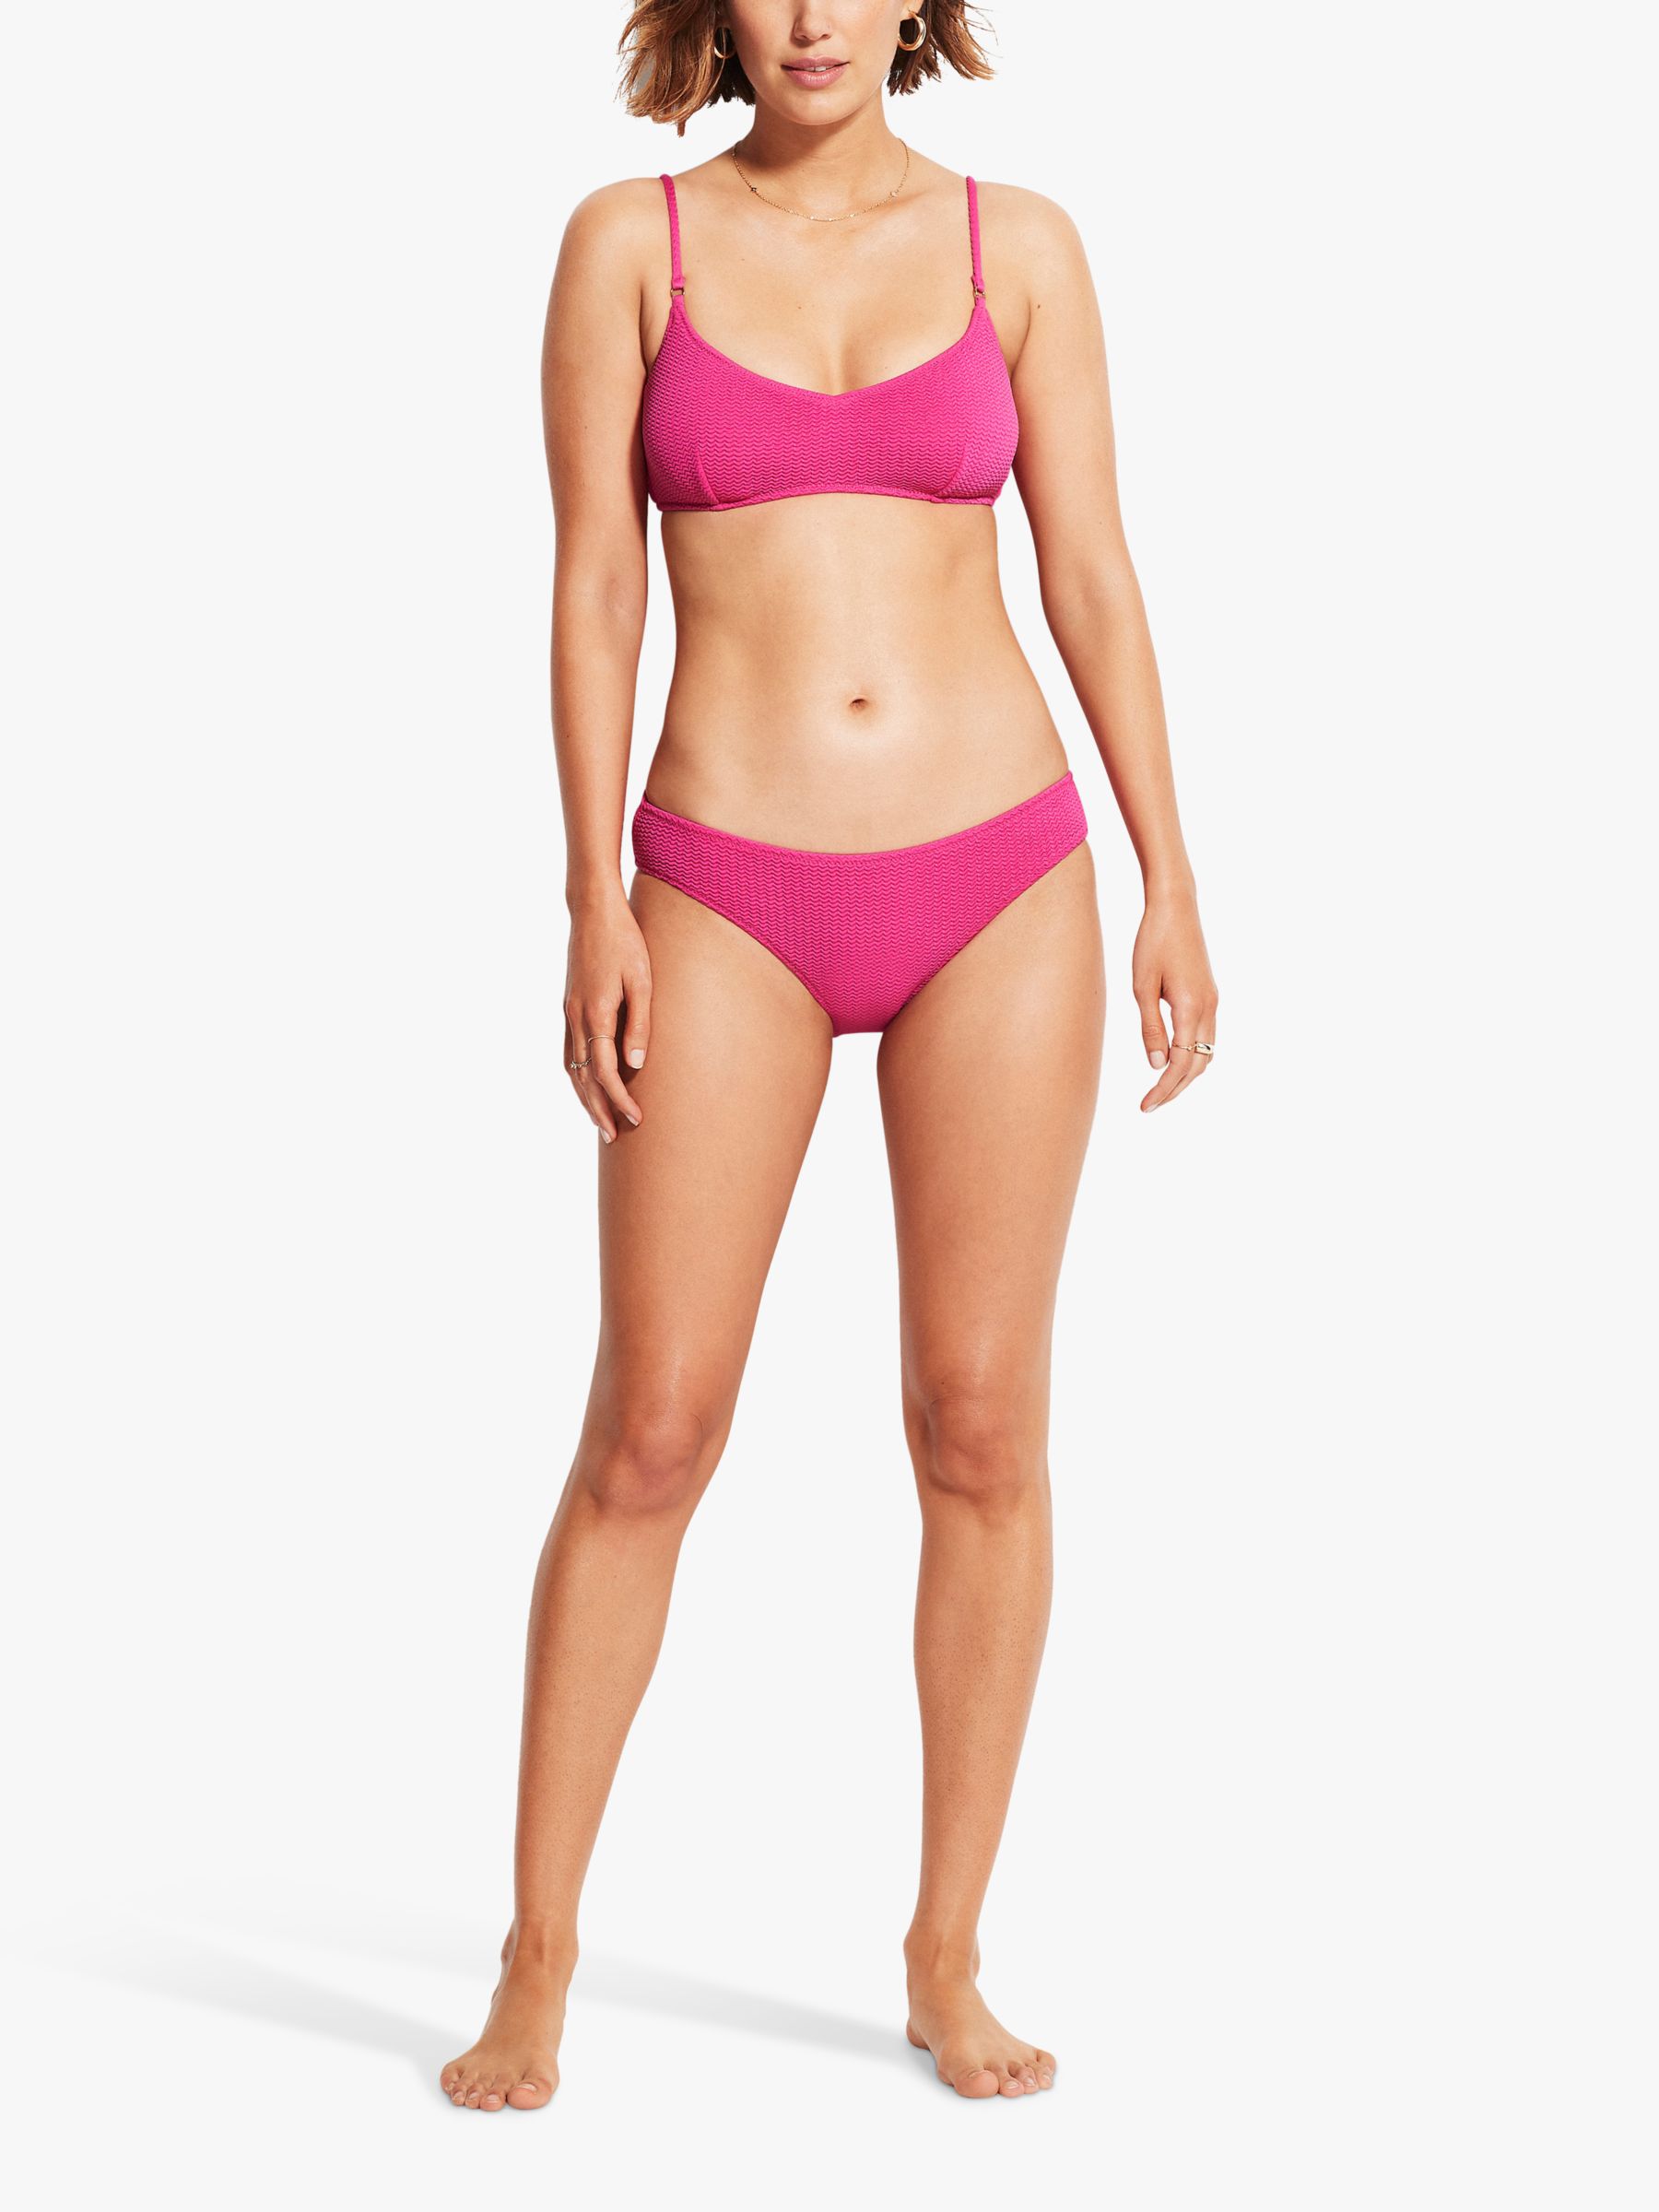 Ribbed Bralette Top - Pink - OceanZen Bikini